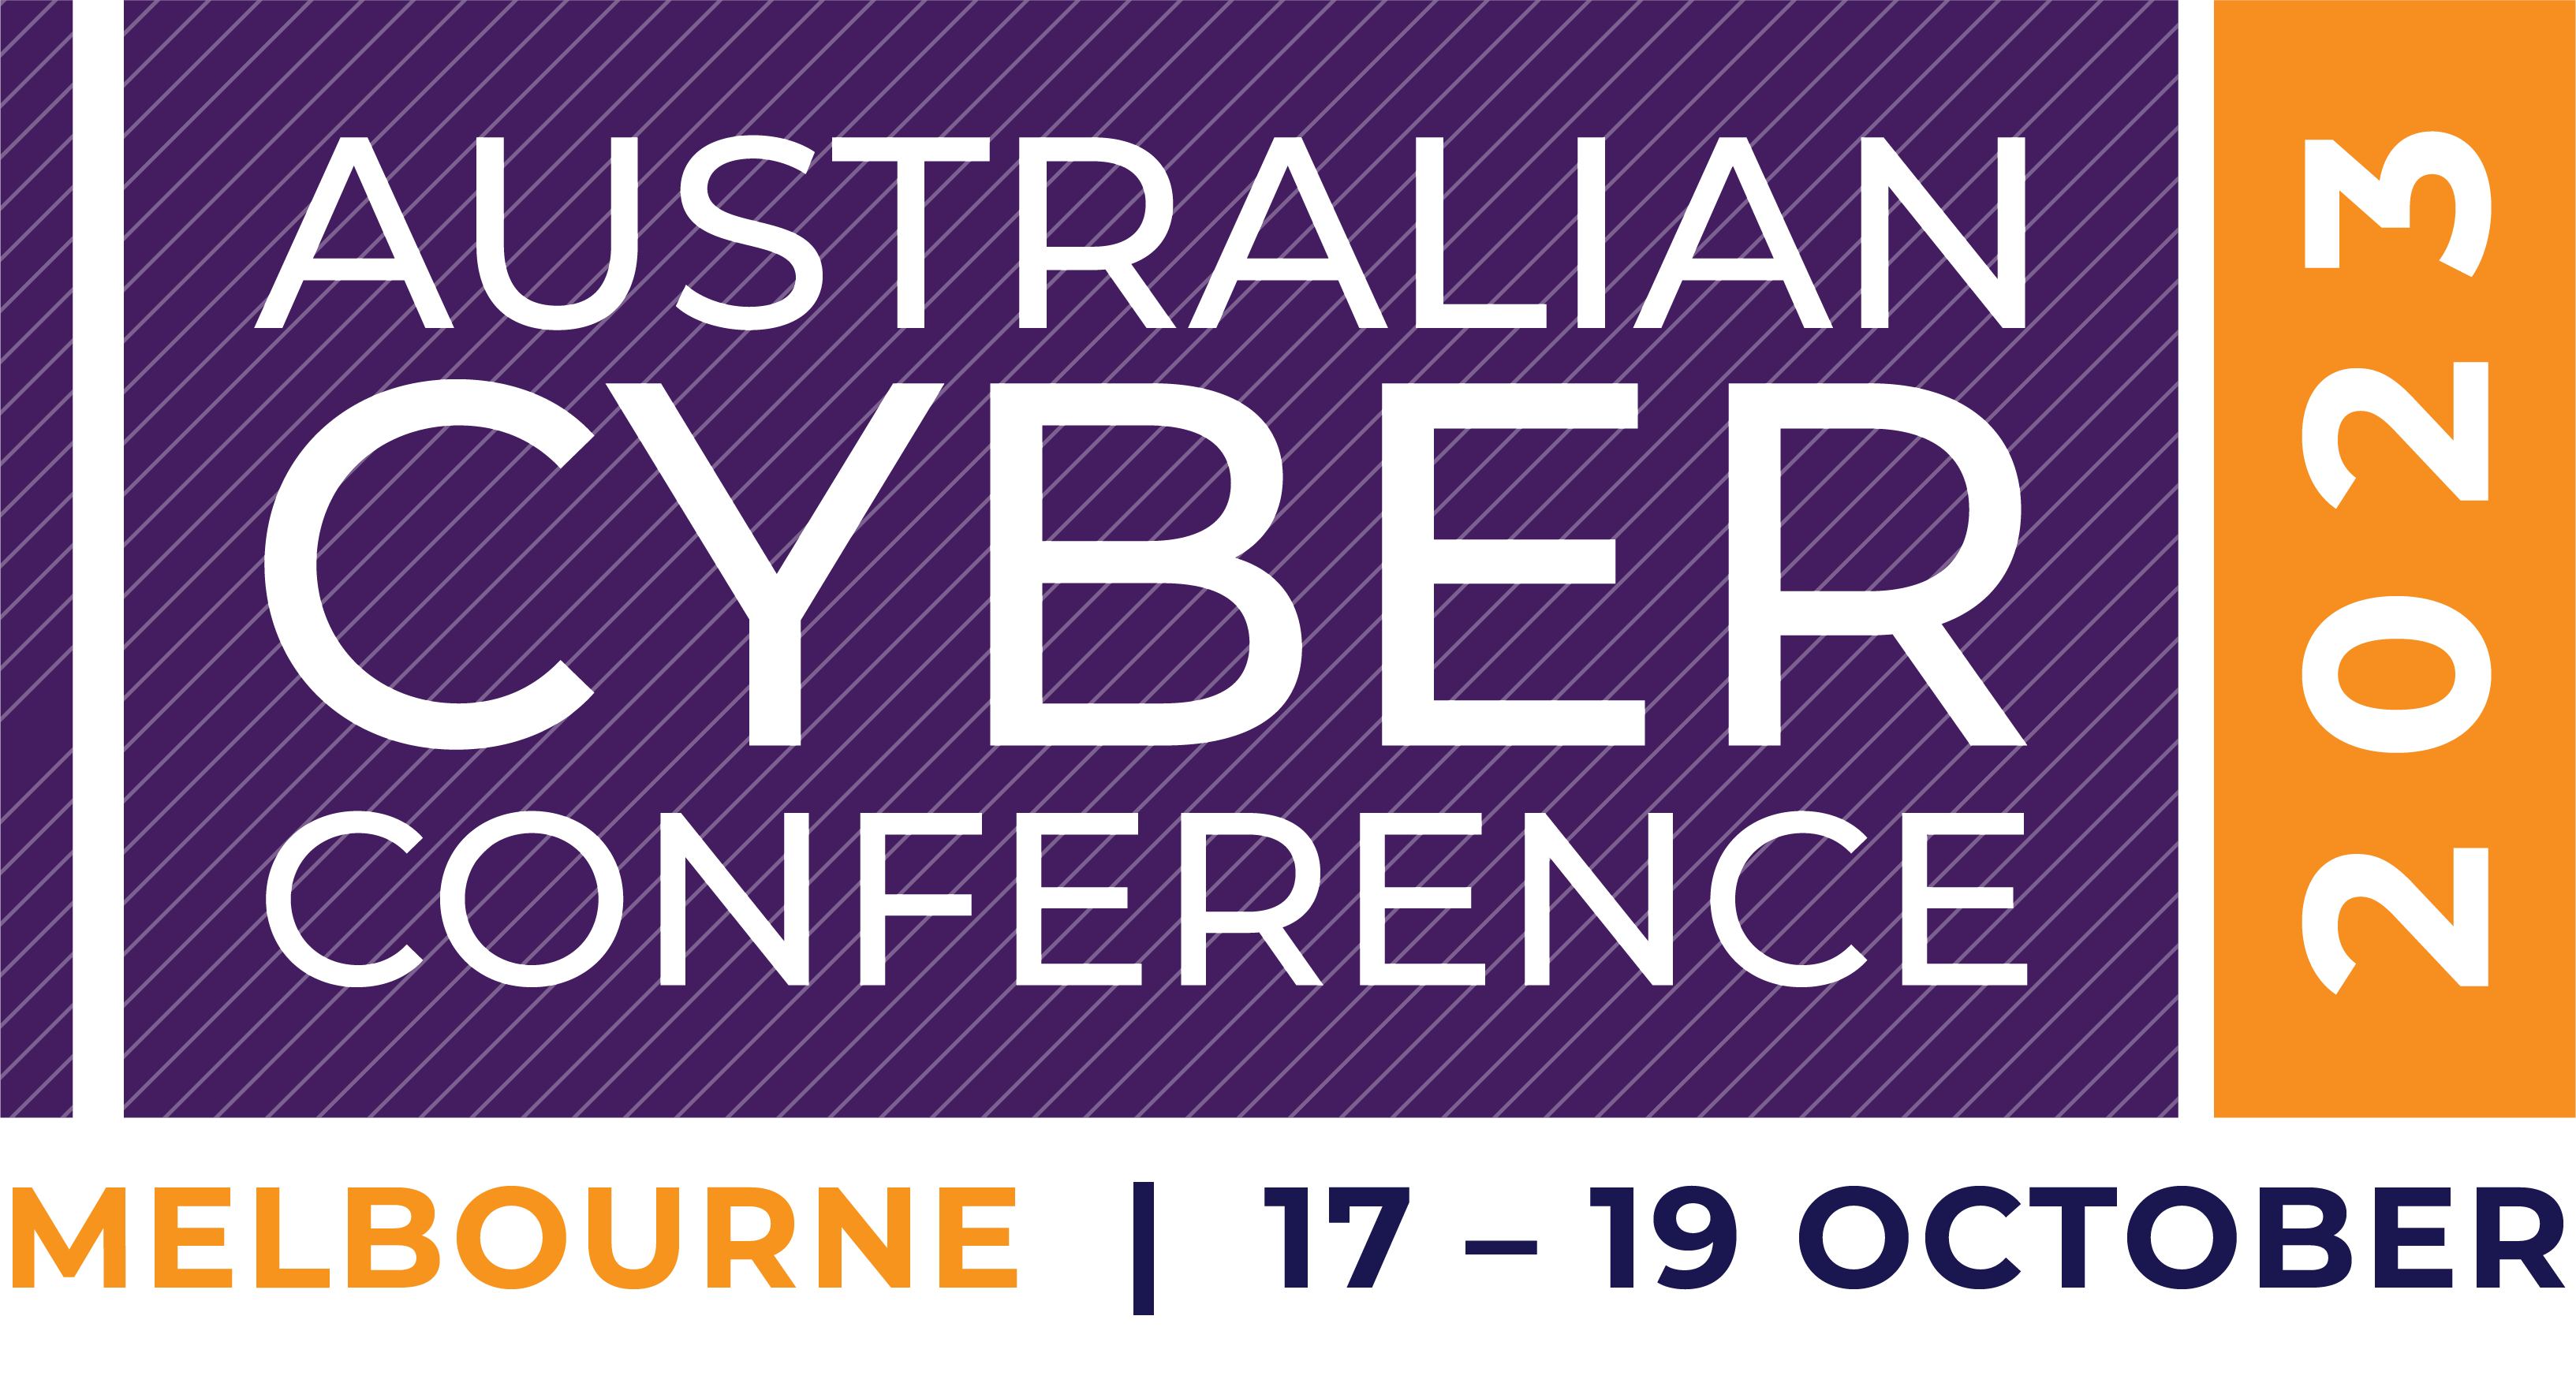 Australian Cyber Conference Melbourne 2023